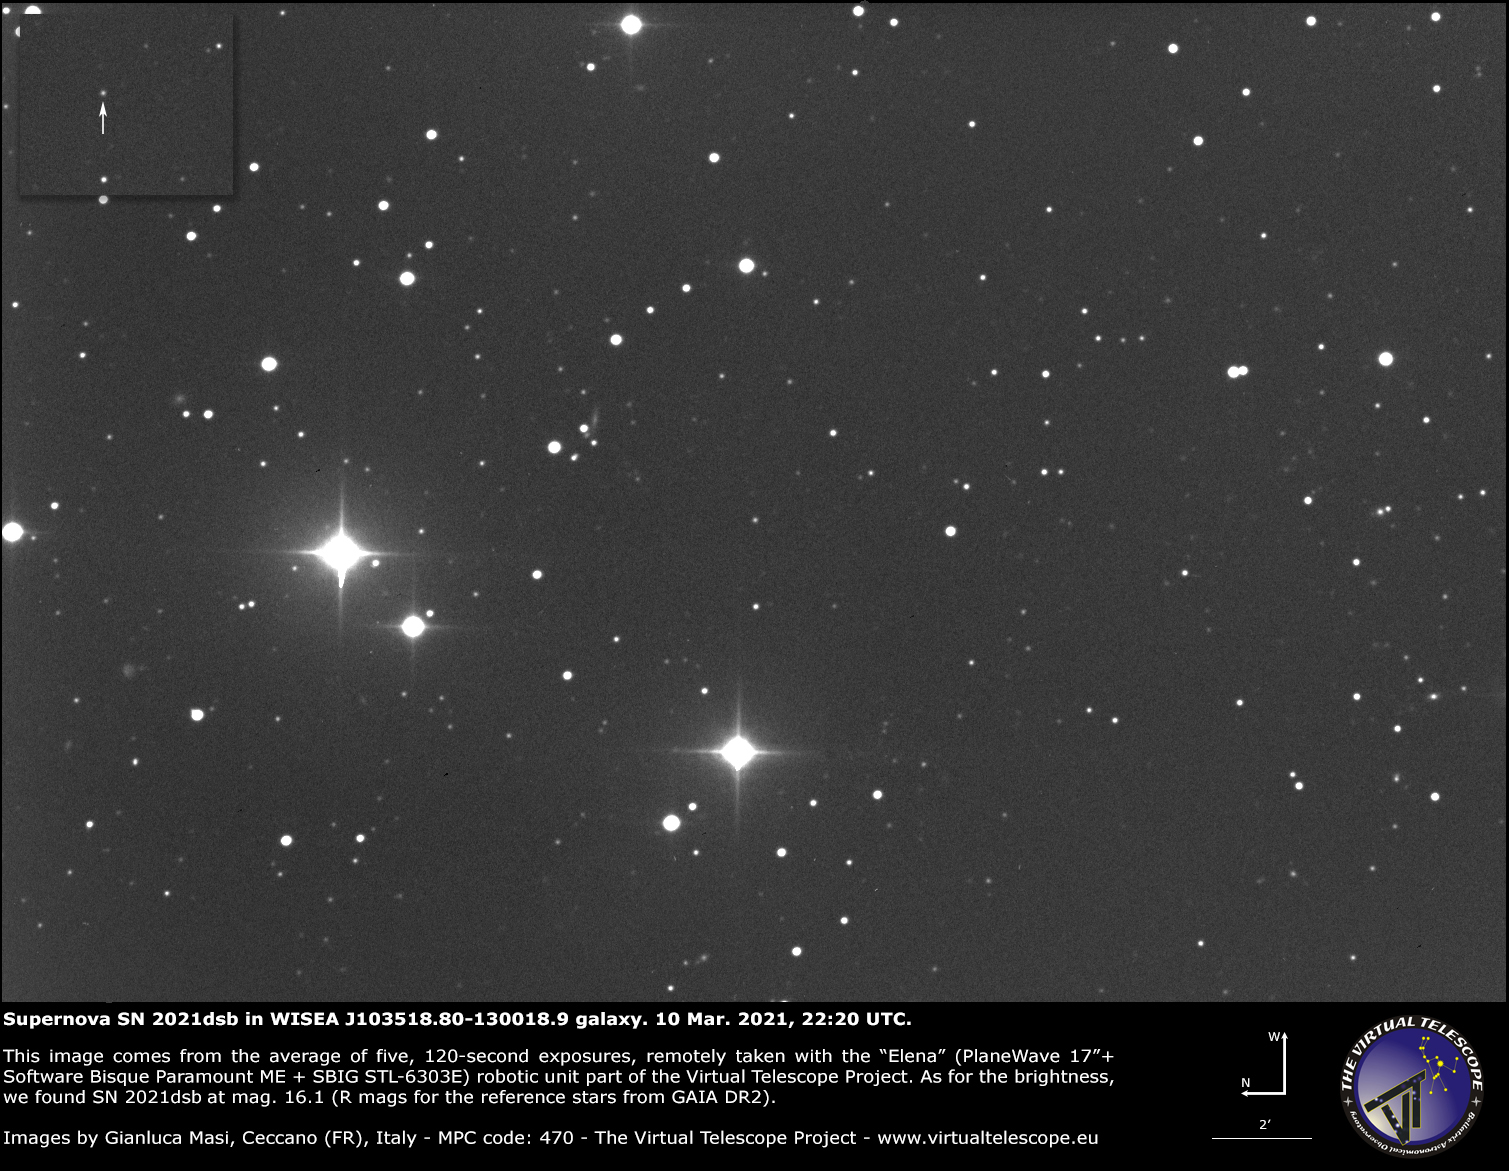 Supernova SN 2021dsb in WISEA J103518.80-130018.9 galaxy: 10 Mar. 2021.